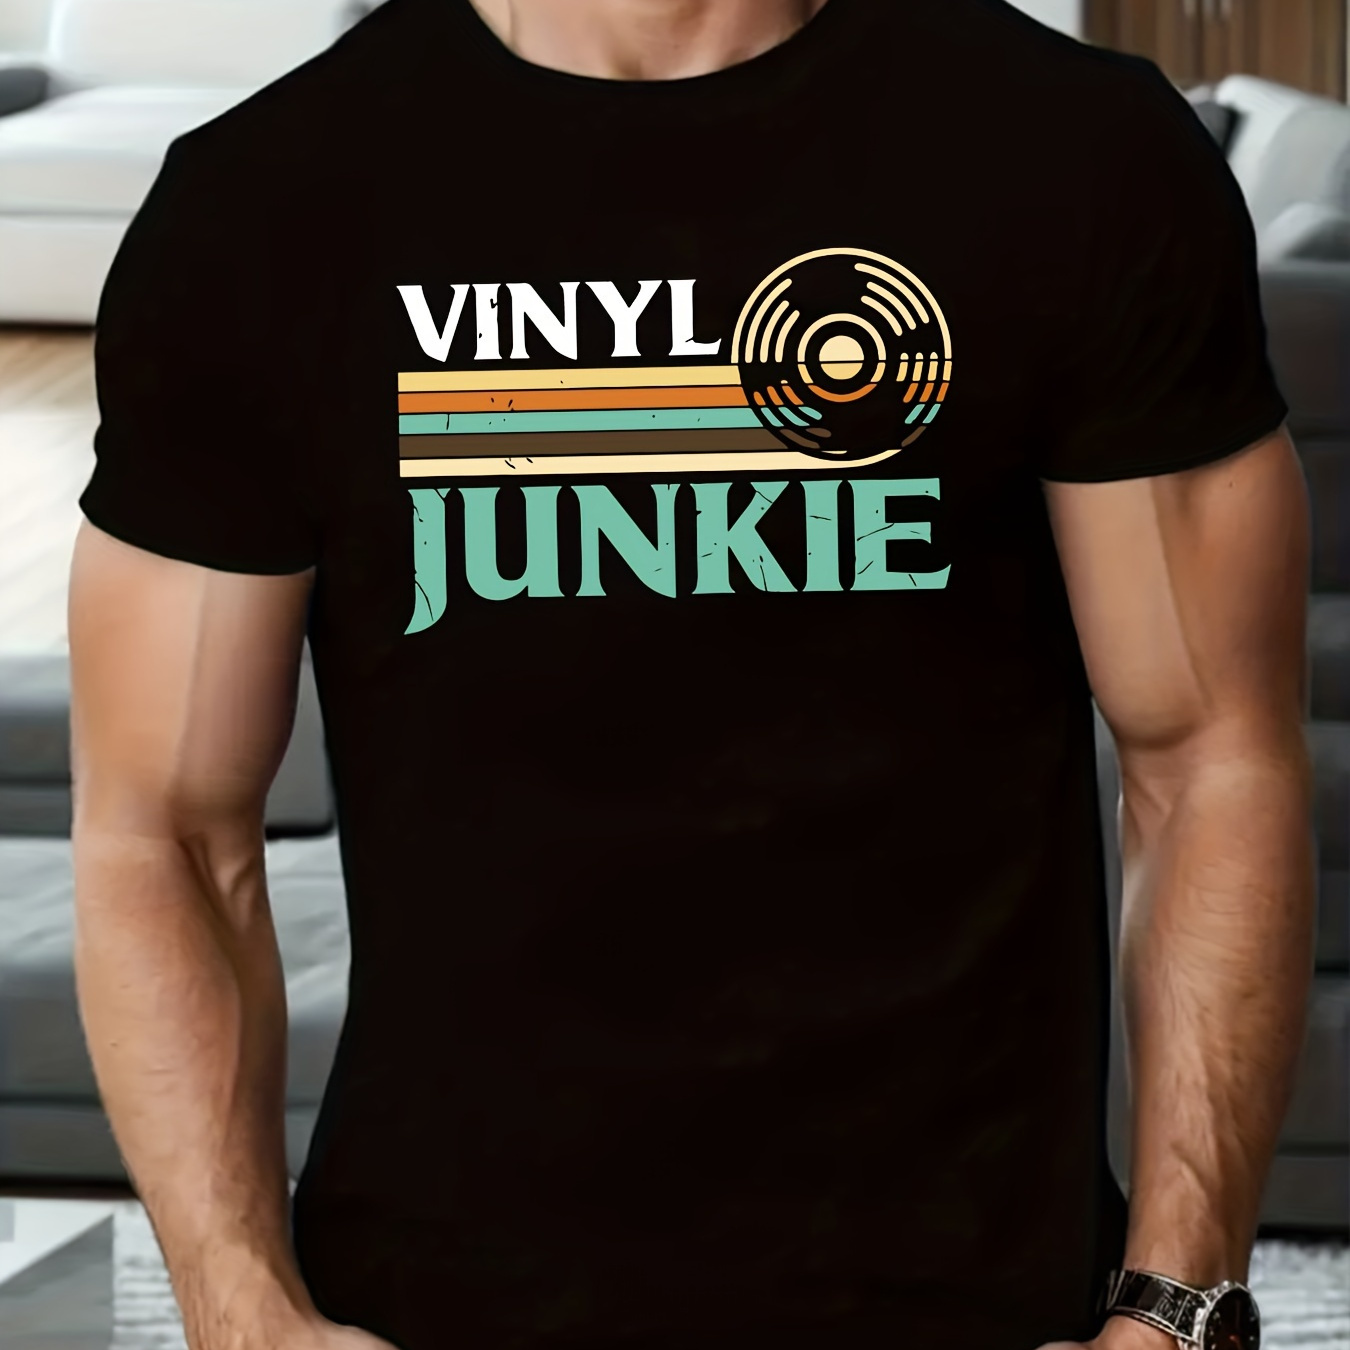 

Vinyl Record Junkie Print Tee Shirt, Tees For Men, Casual Short Sleeve T-shirt For Summer